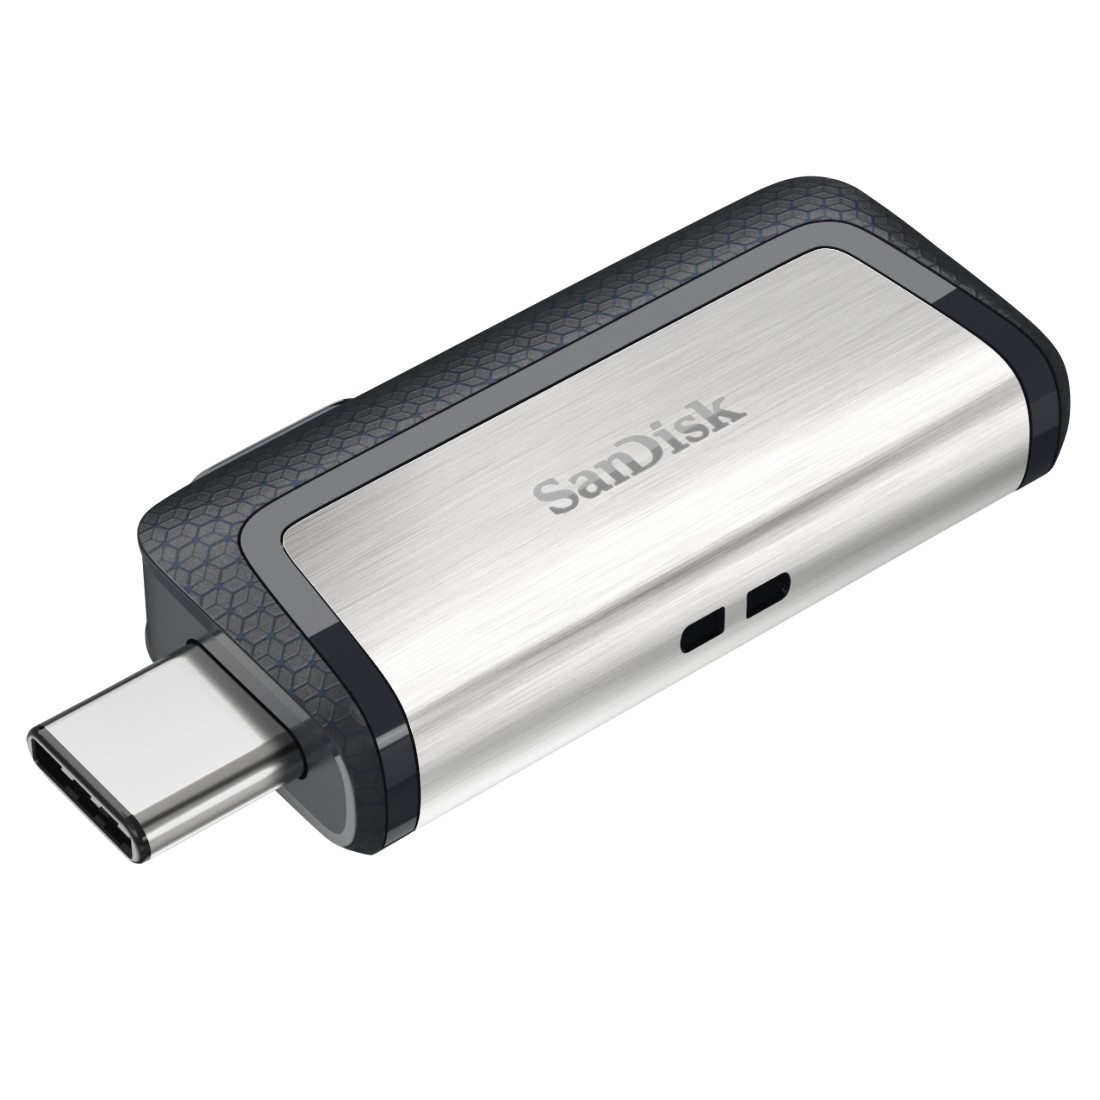 USB kľúč SanDisk Ultra Dual Drive, 64 GB, USB 3.1, rýchlosť 150 MB/s